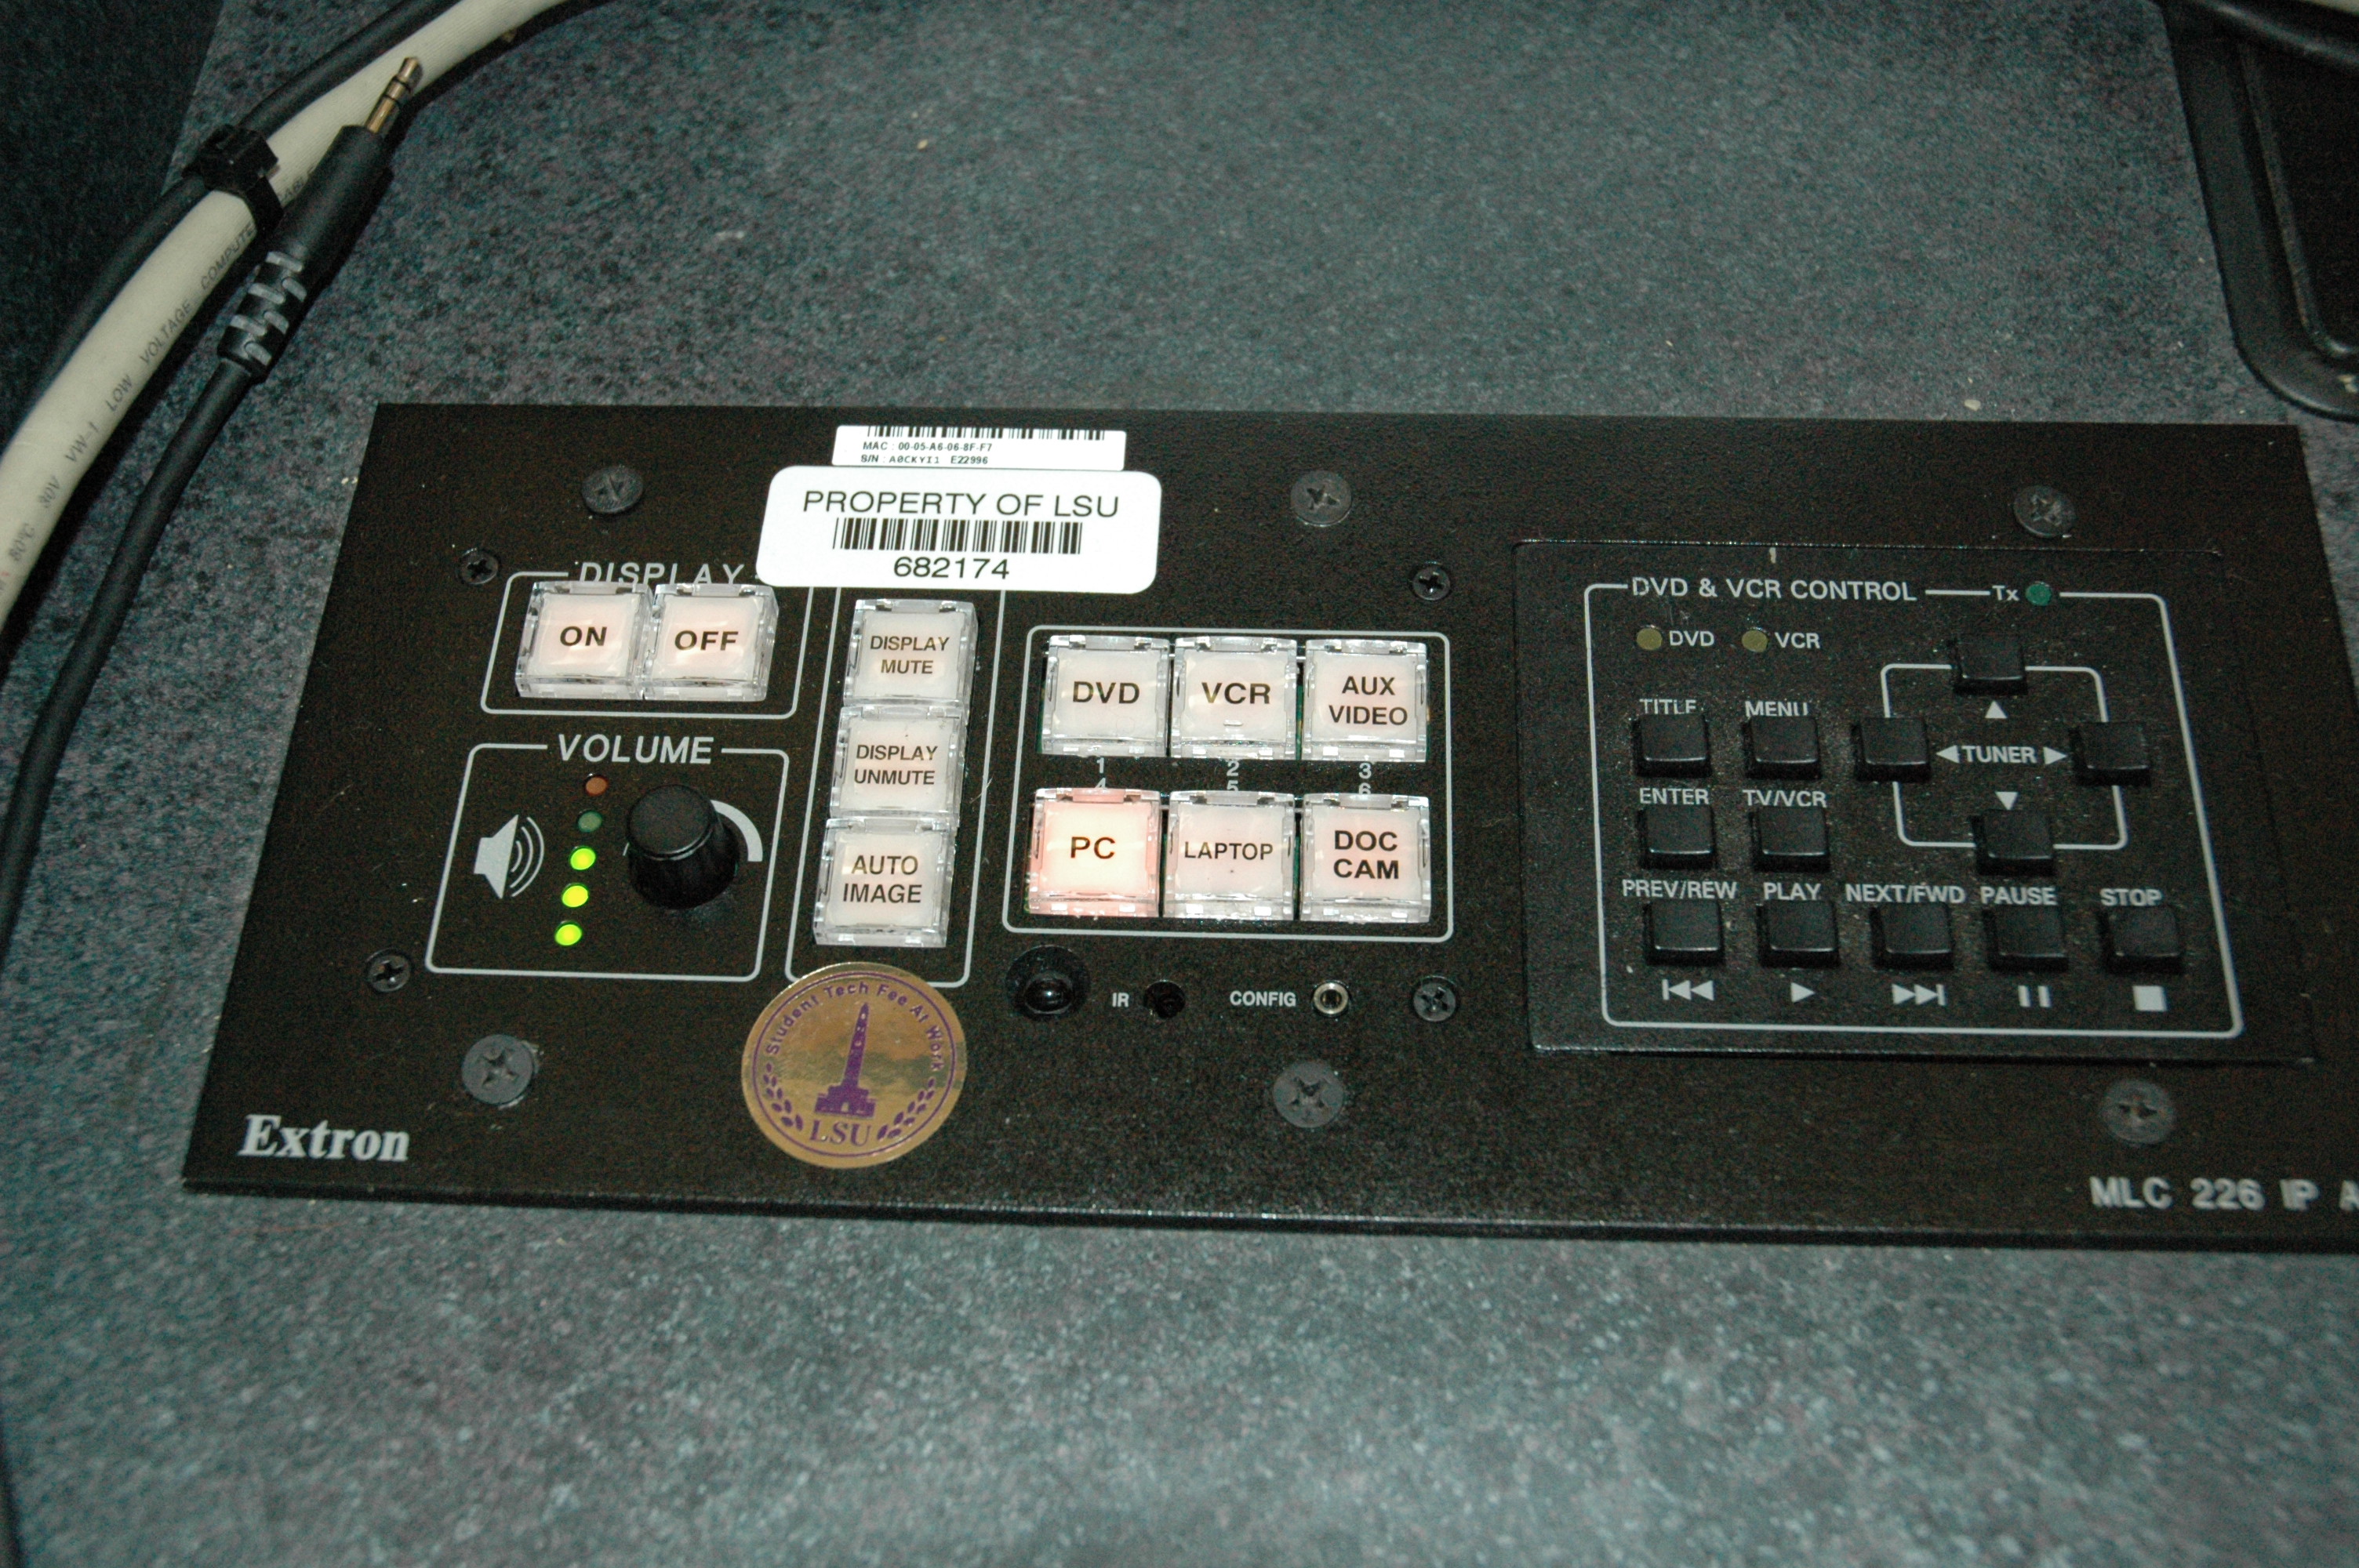  controls on Multimedia Station